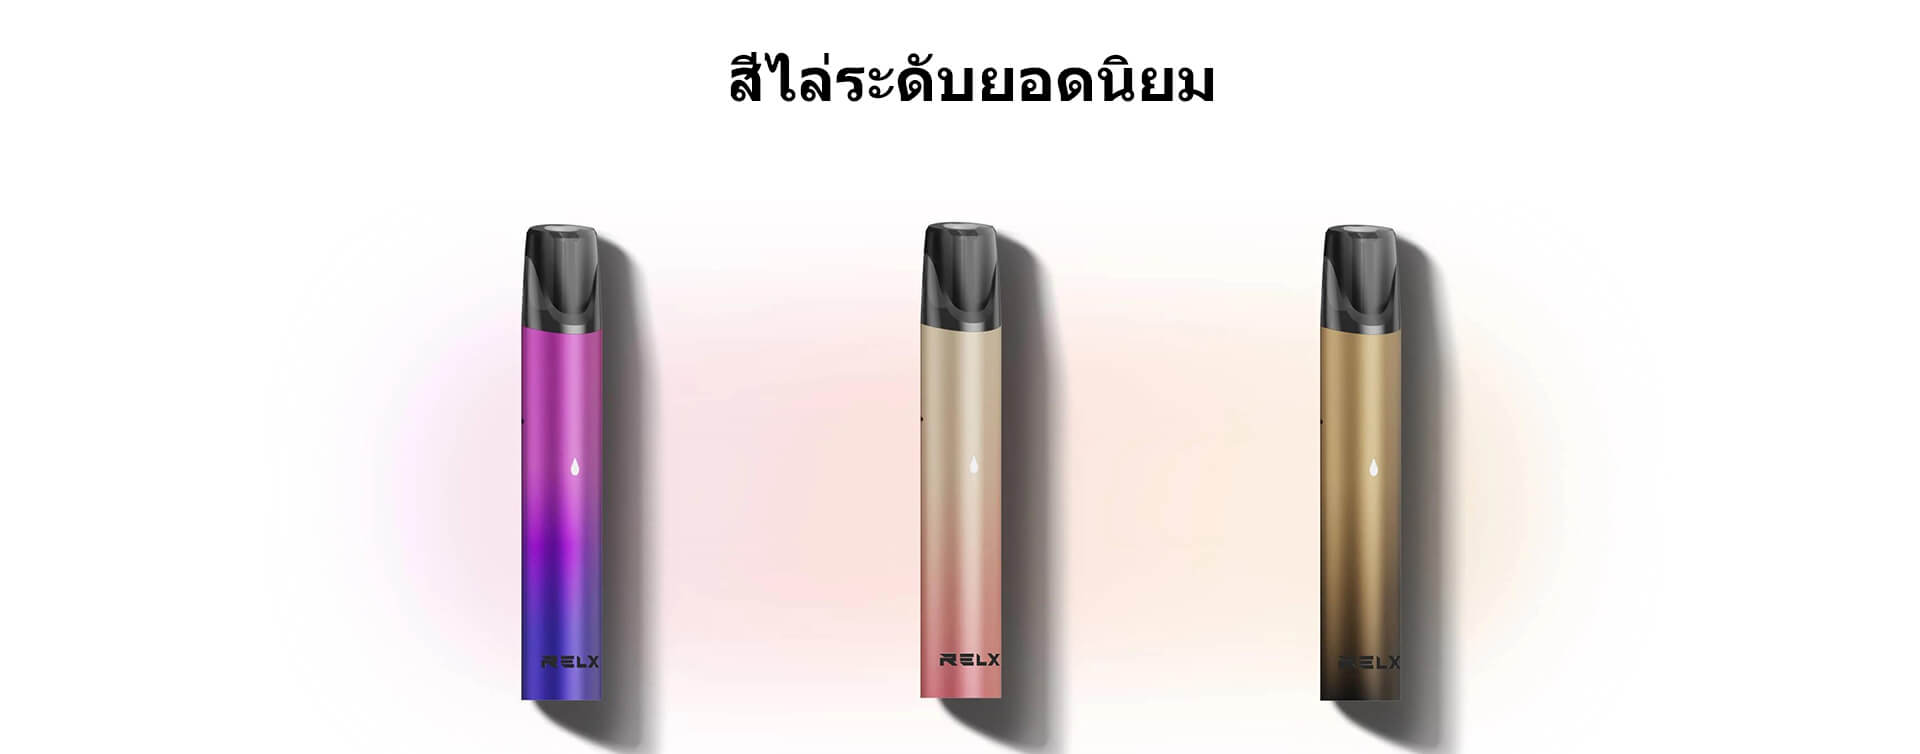 RELX Phantom รุ่นใหม่ 5th Generation​ | RELX Thailand RELX Classic Device | อุปกรณ์คลาสสิก RELX - มิสติก ออโรร่า